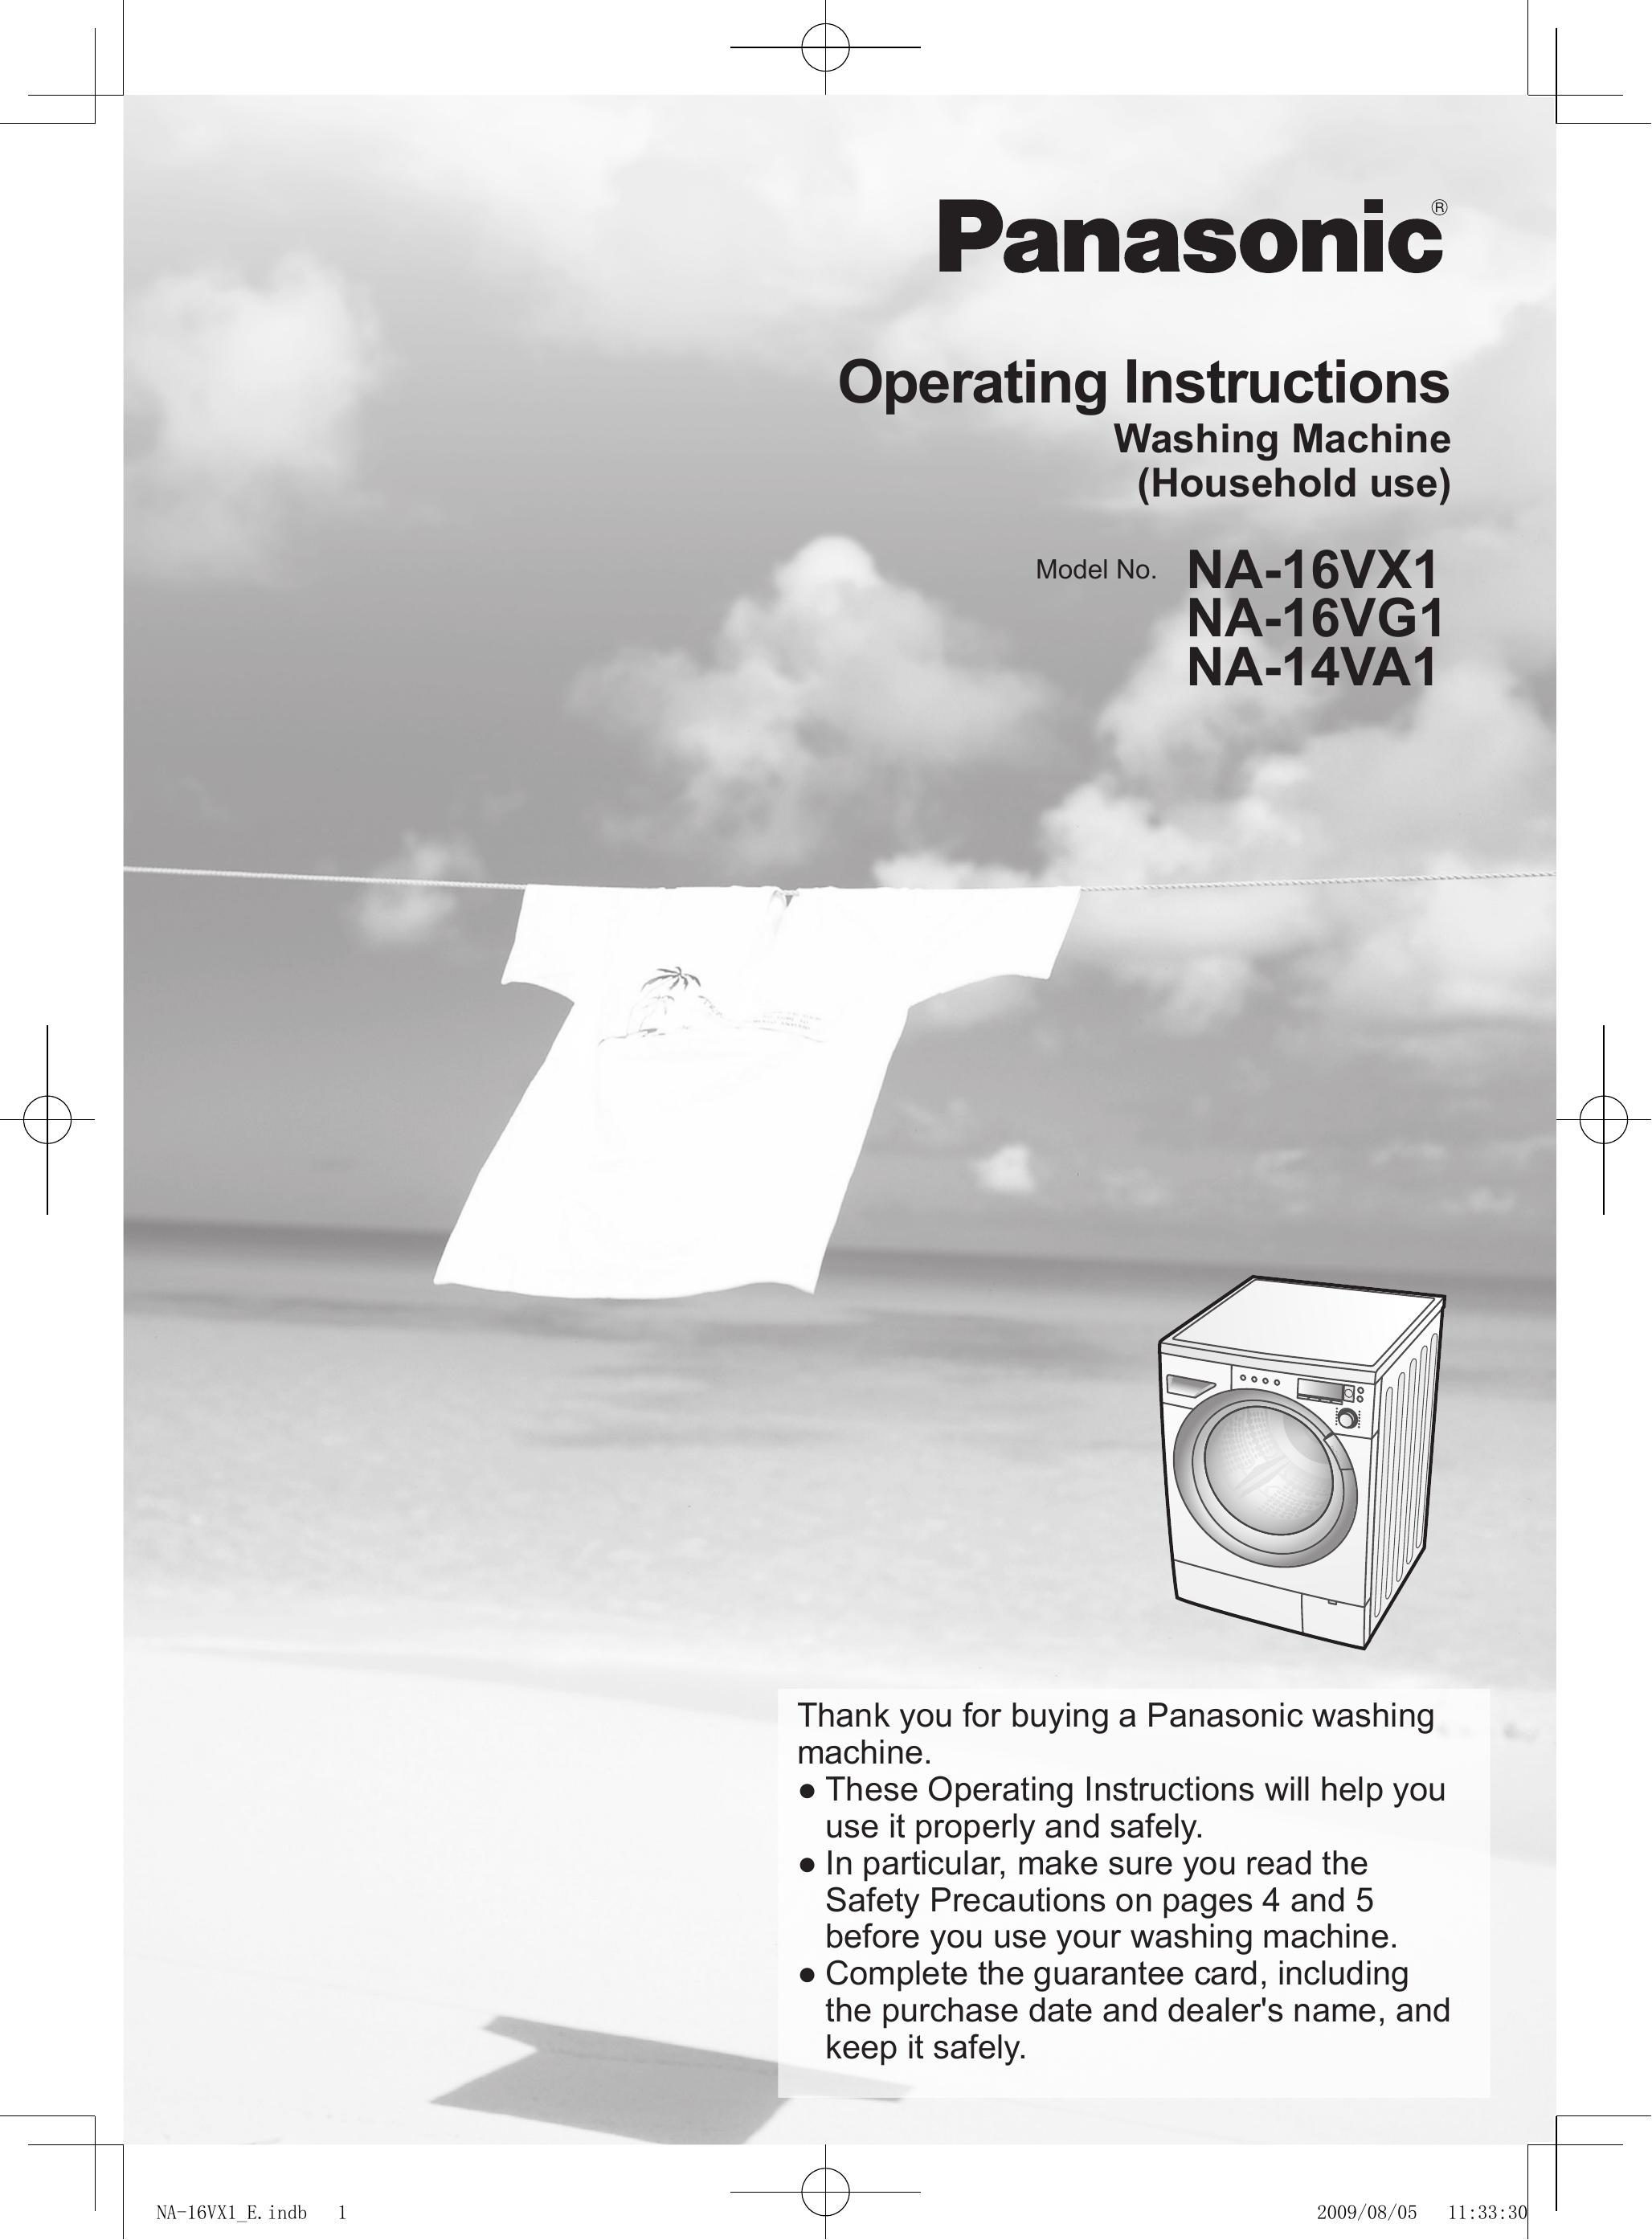 Panasonic NA-16VX1 Washer/Dryer User Manual